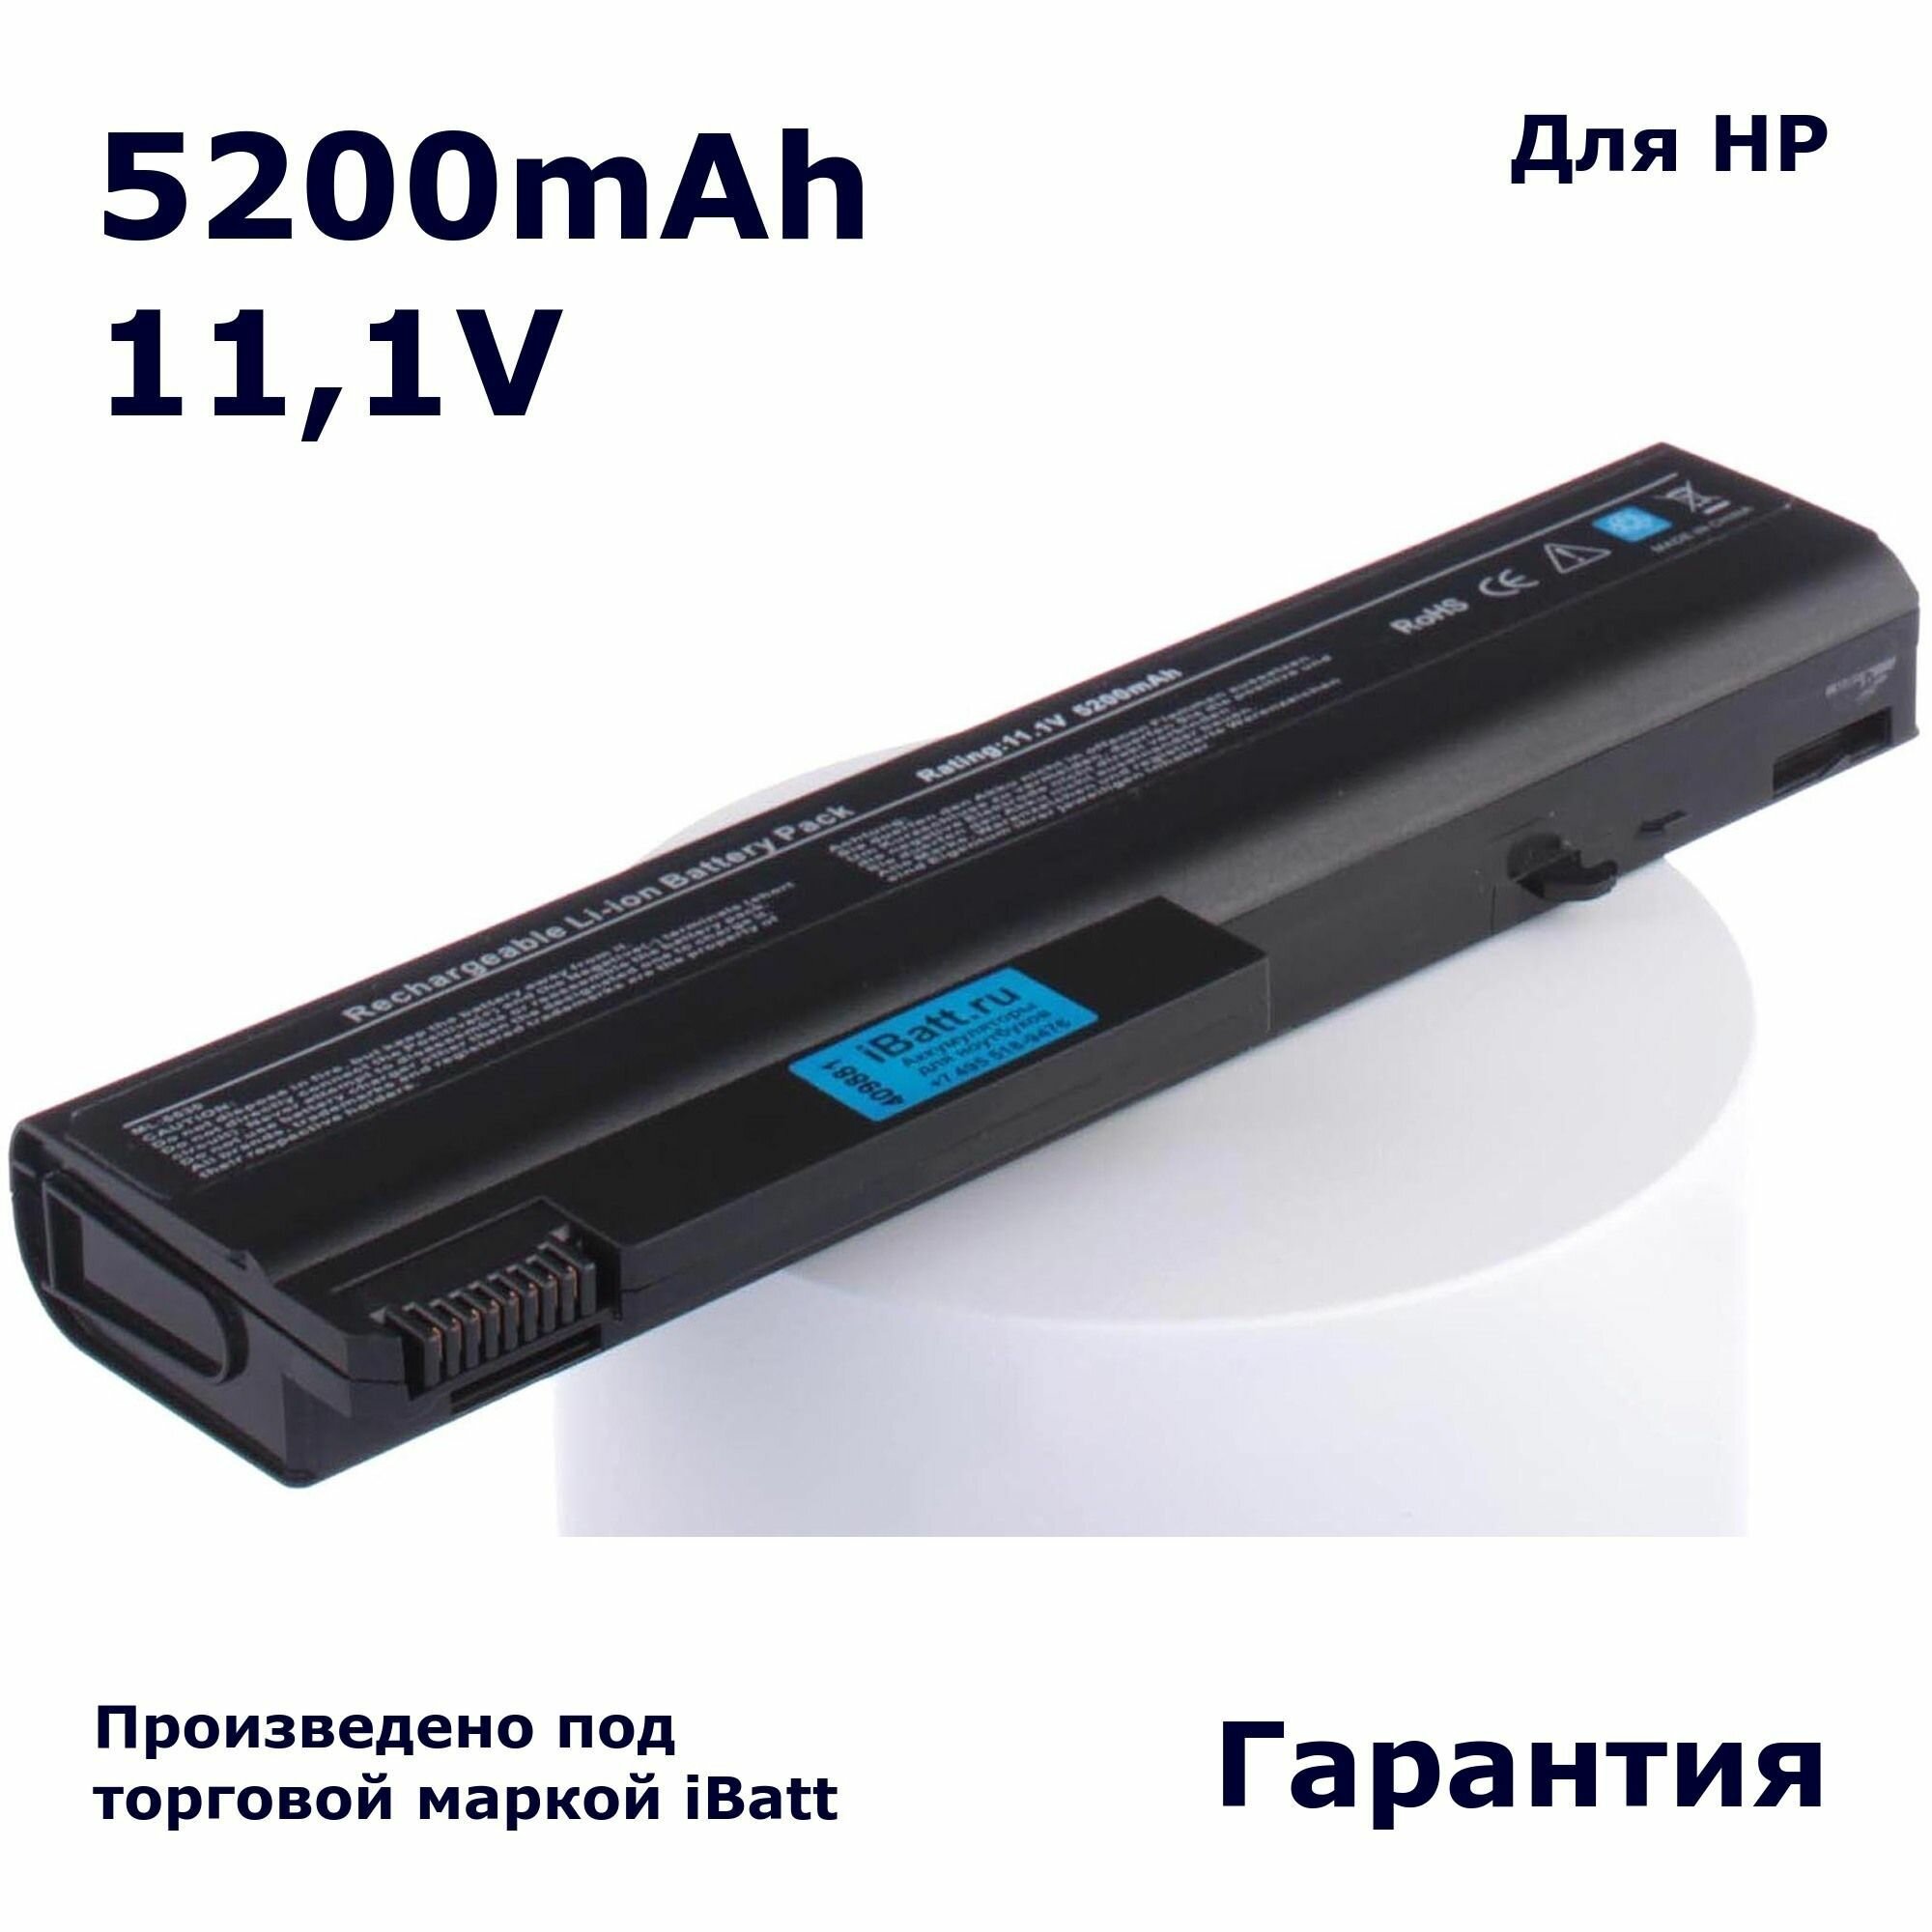 Аккумулятор iBatt 5200mAh для 486296-001 HSTNN-I44C HSTNN-I44C-A HSTNN-UB69 KU531AA HSTNN-CB69 HSTNN-iB69 TD06055 AU213AA